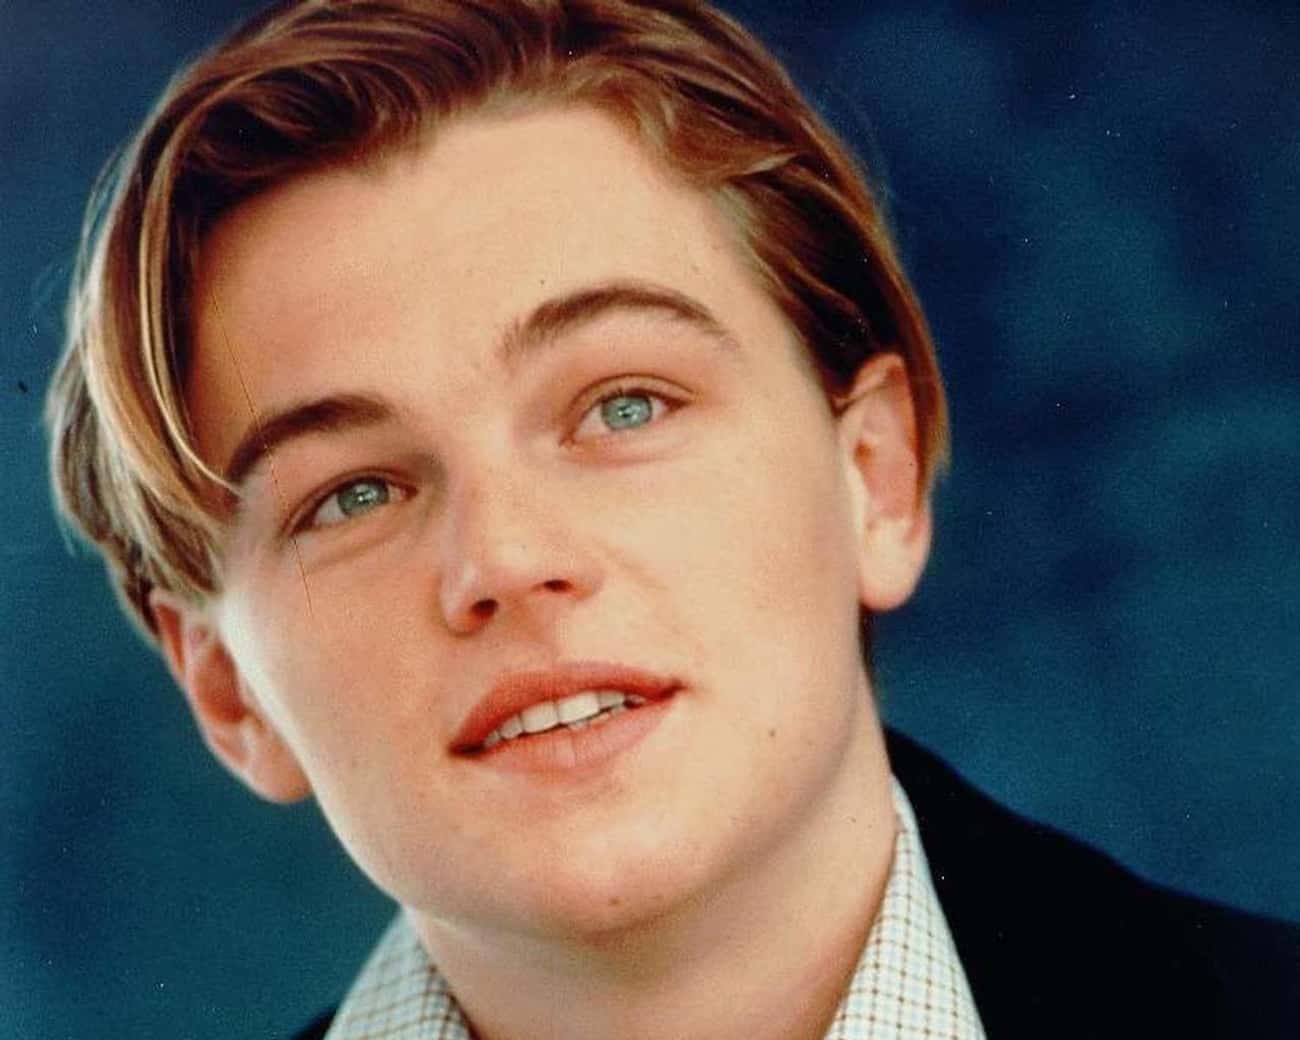 Leonardo DiCaprio Young And In Titanic